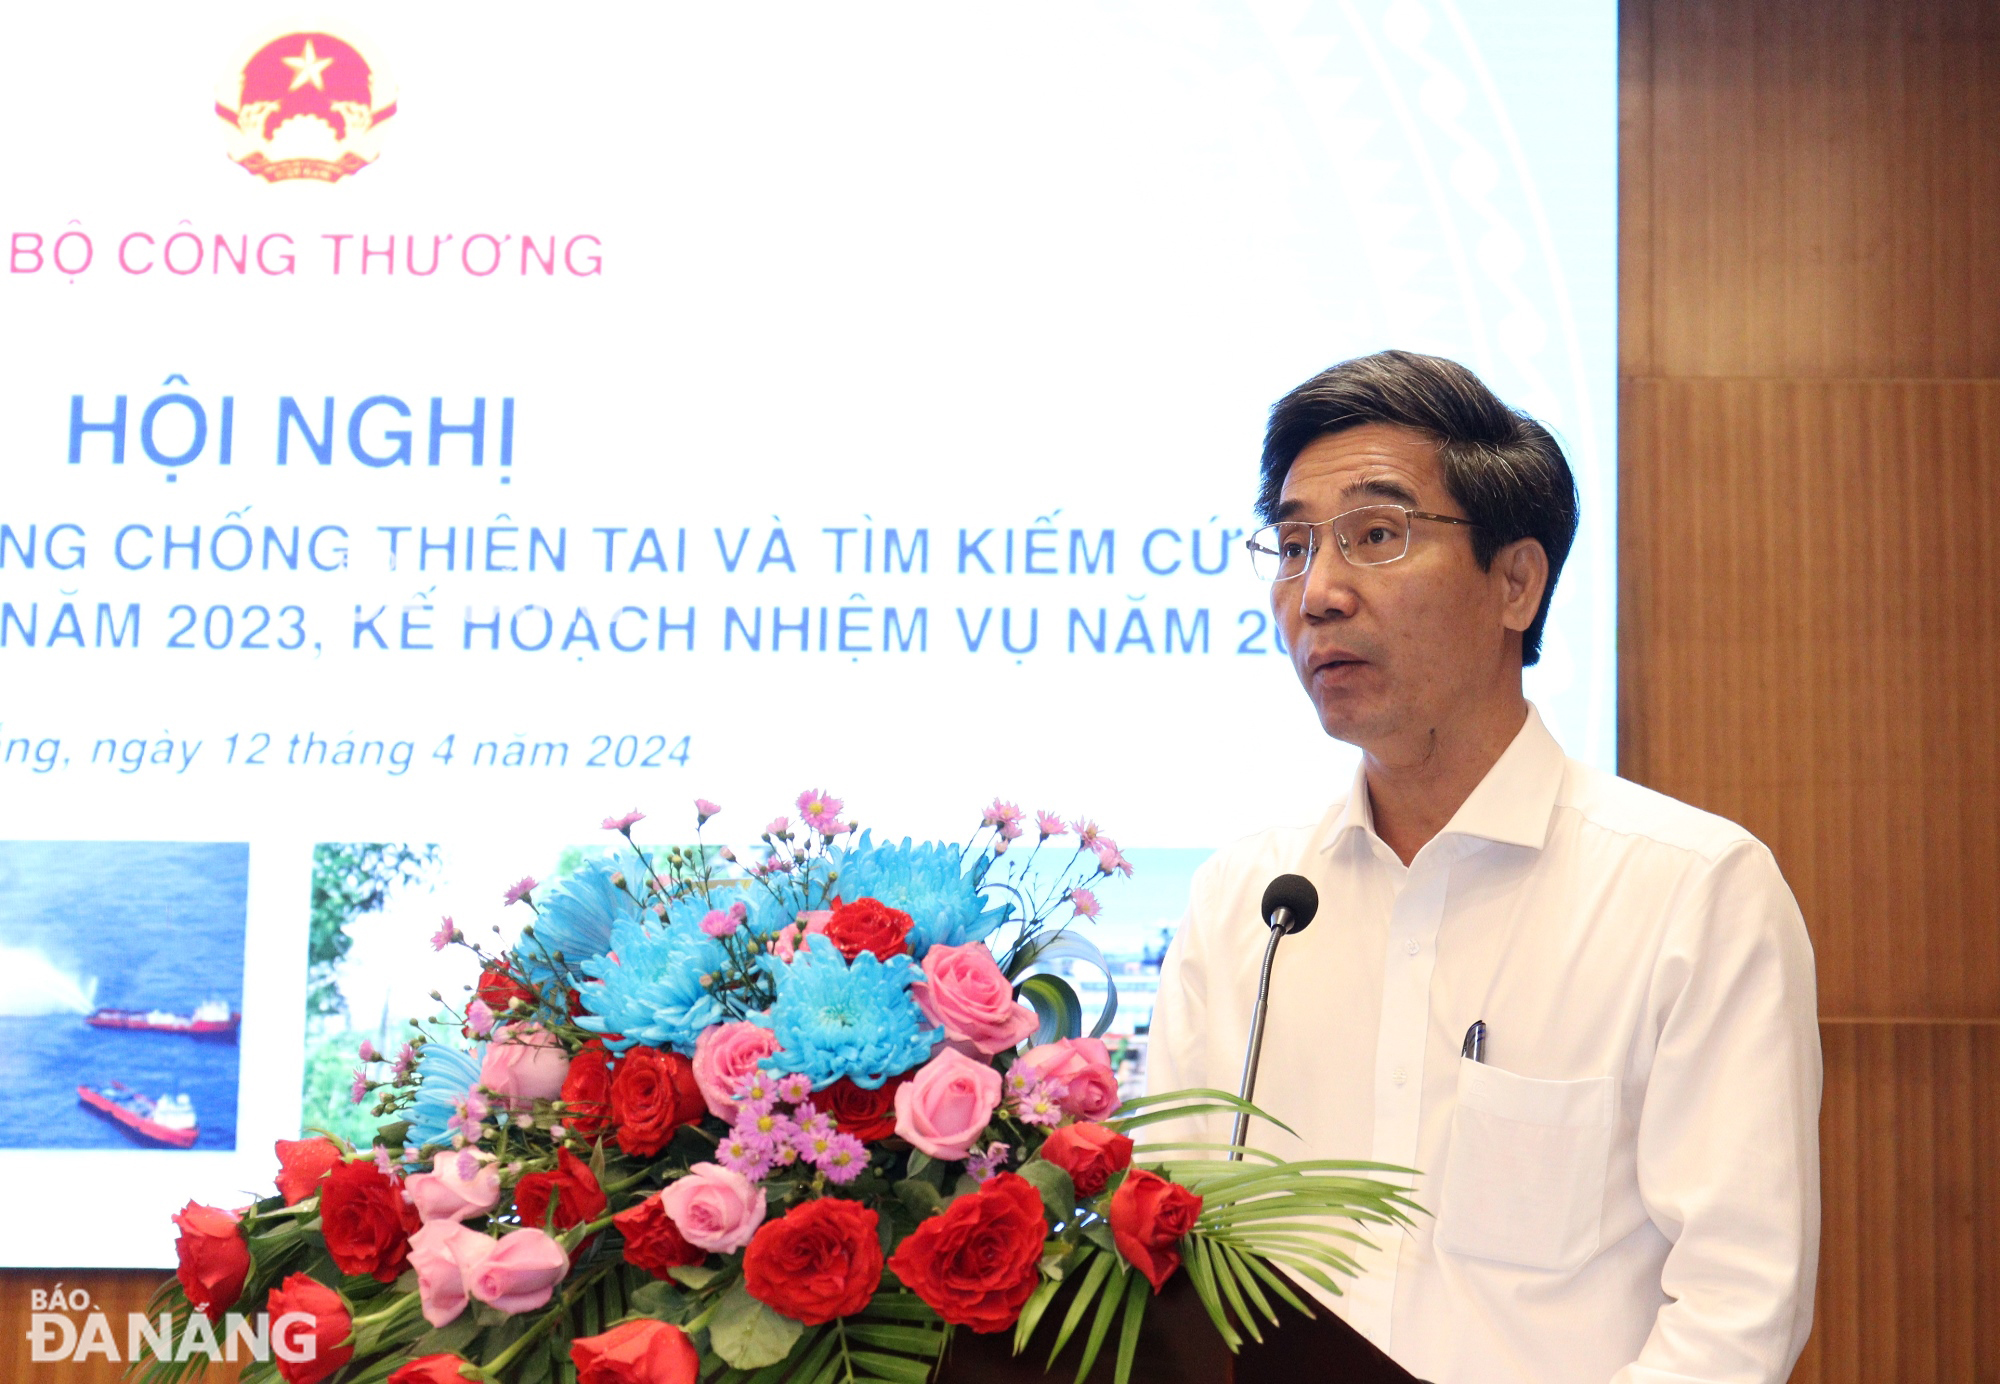 Vice Chairman of Da Nang People's Committee Tran Chi Cuong at the conference. Photo: HOANG HIEP